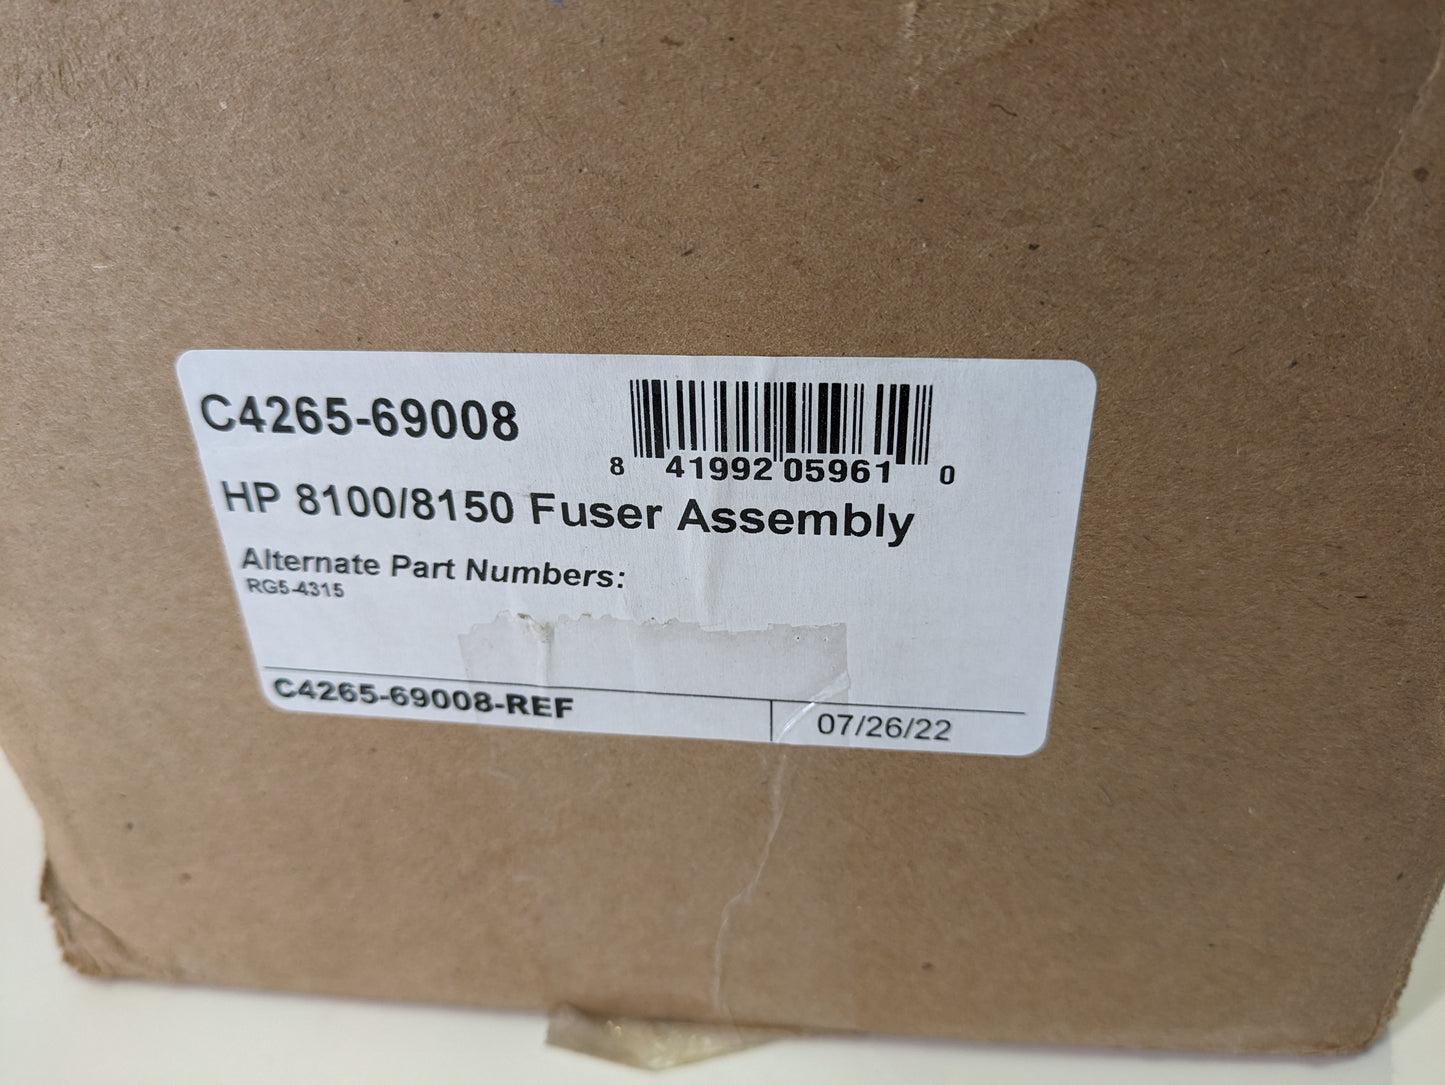 Depot International HP 8100/8150 Fuser Assembly - C4265-69008-REF New